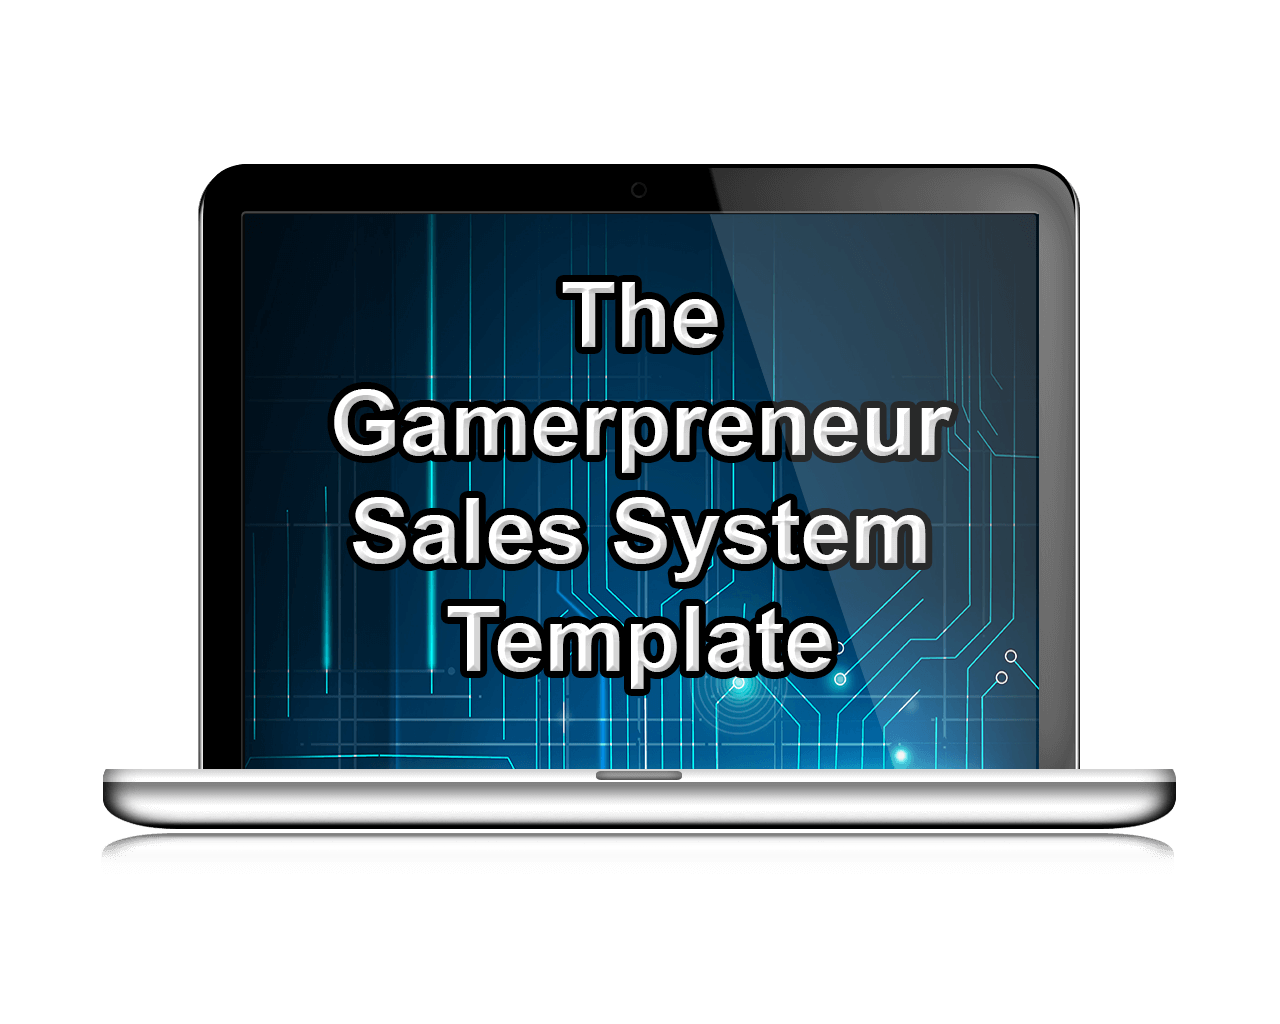 The Gamerpreneur Sales System Template Image